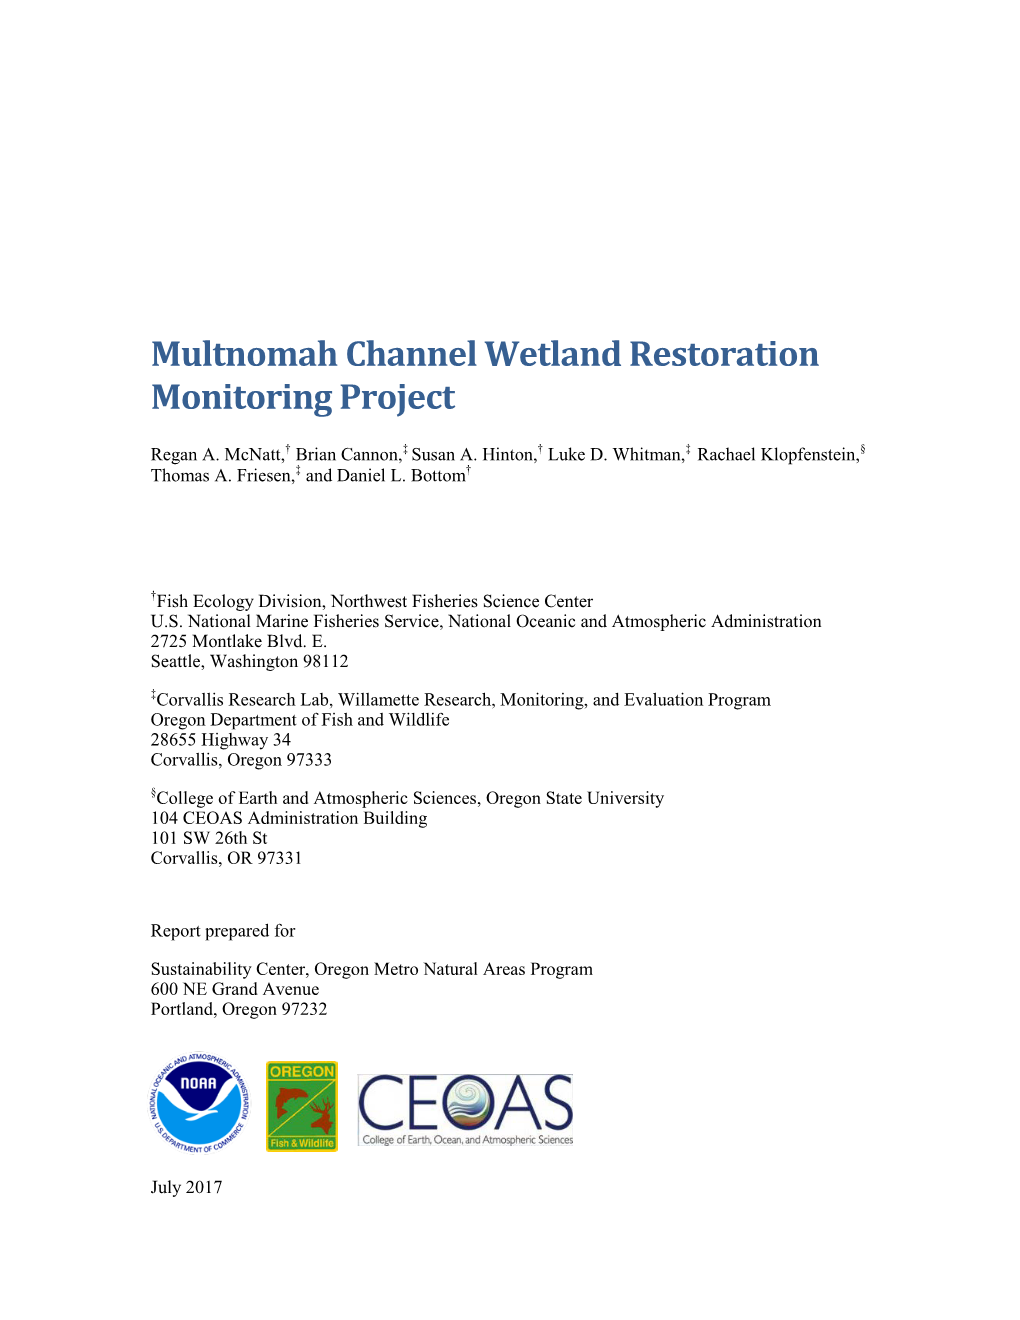 Multnomah Channel Wetland Restoration Monitoring Project